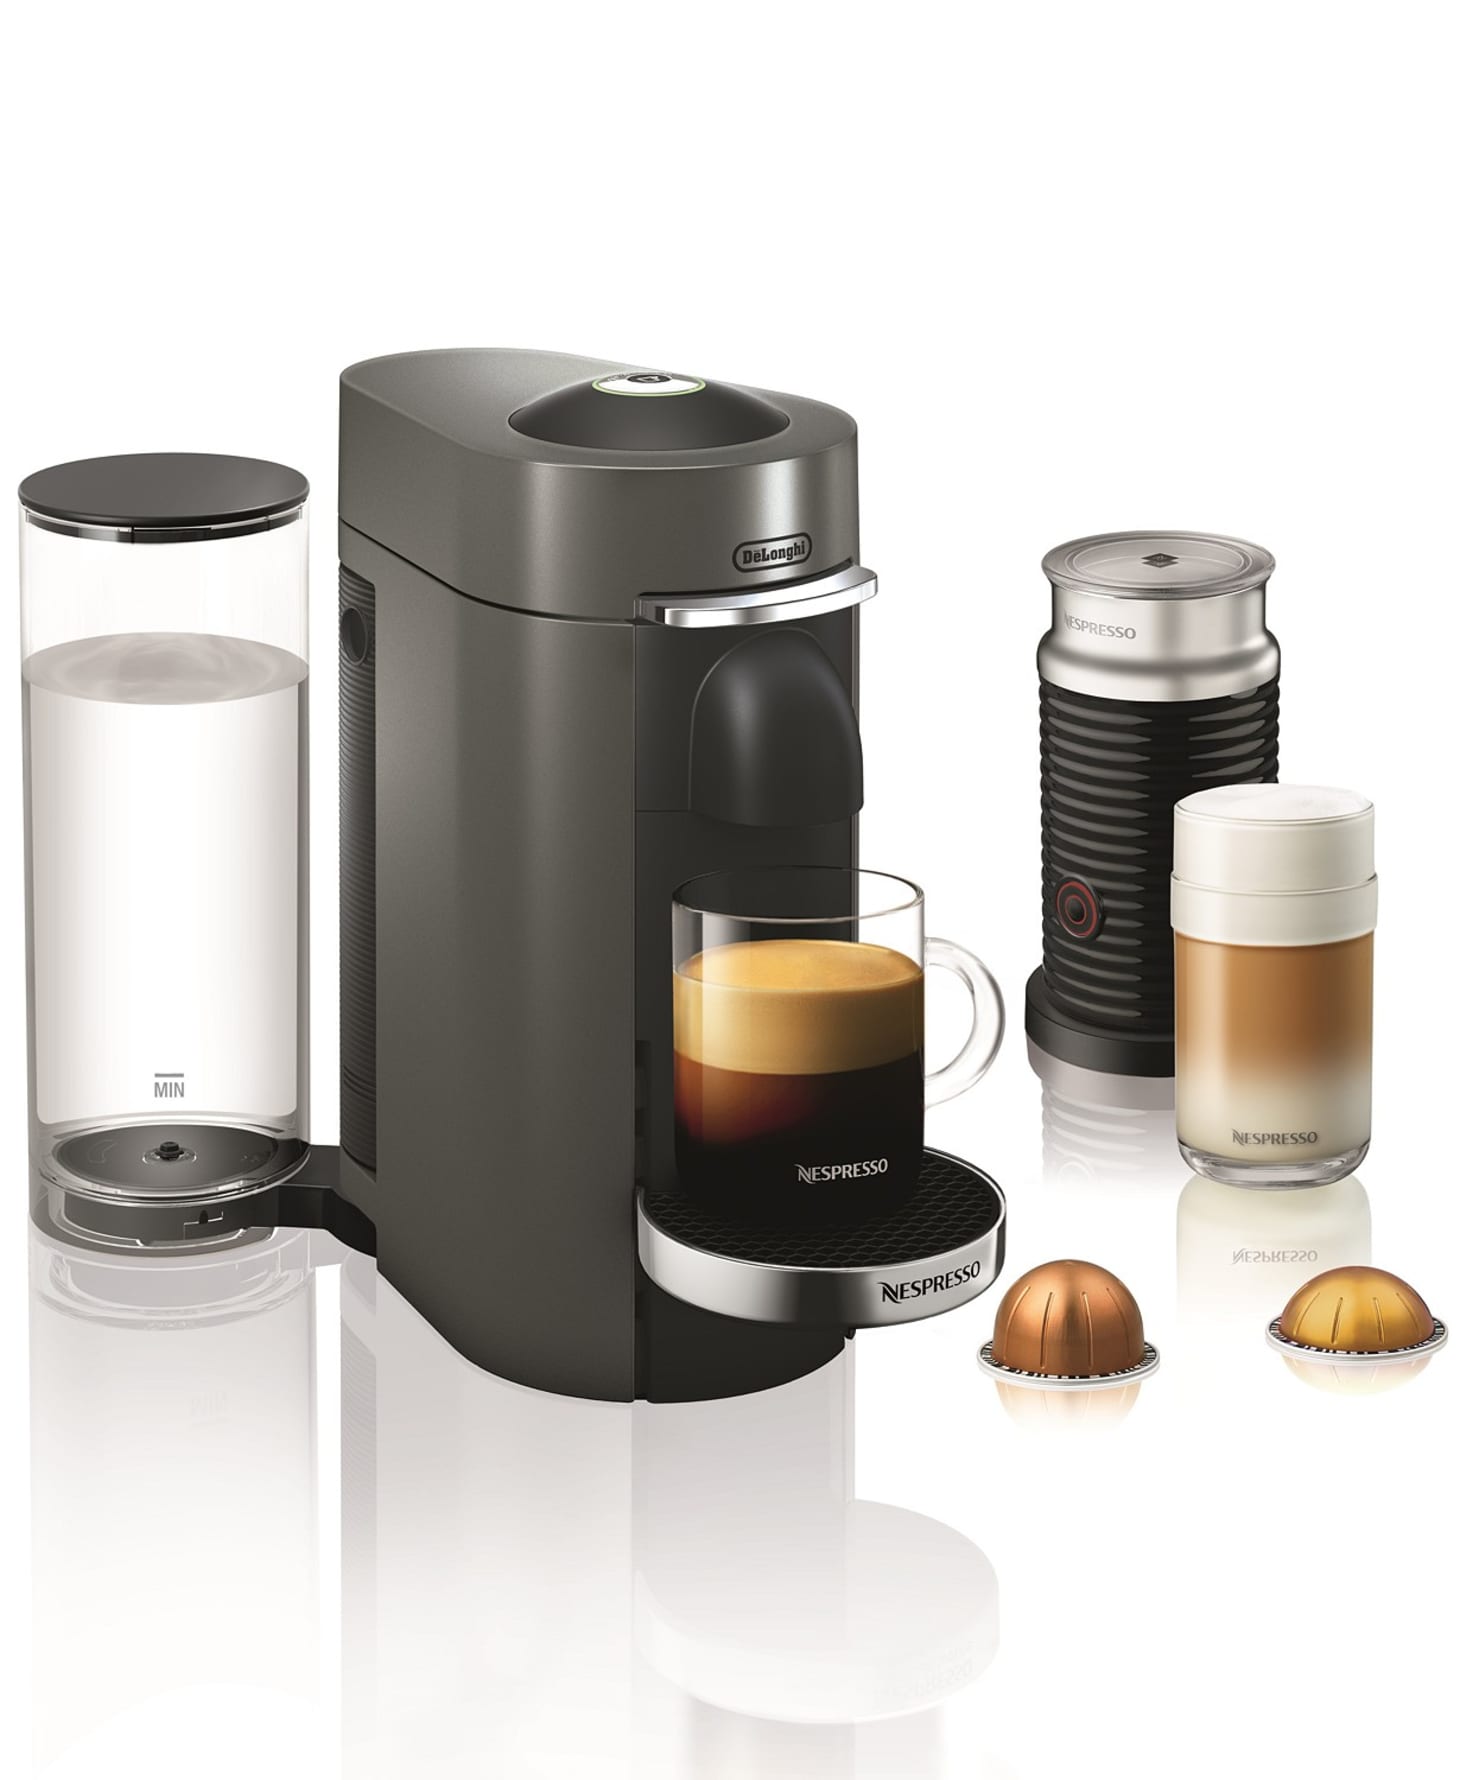 Nespresso Vertuo Plus Coffee Maker Macys March 2020 Sale